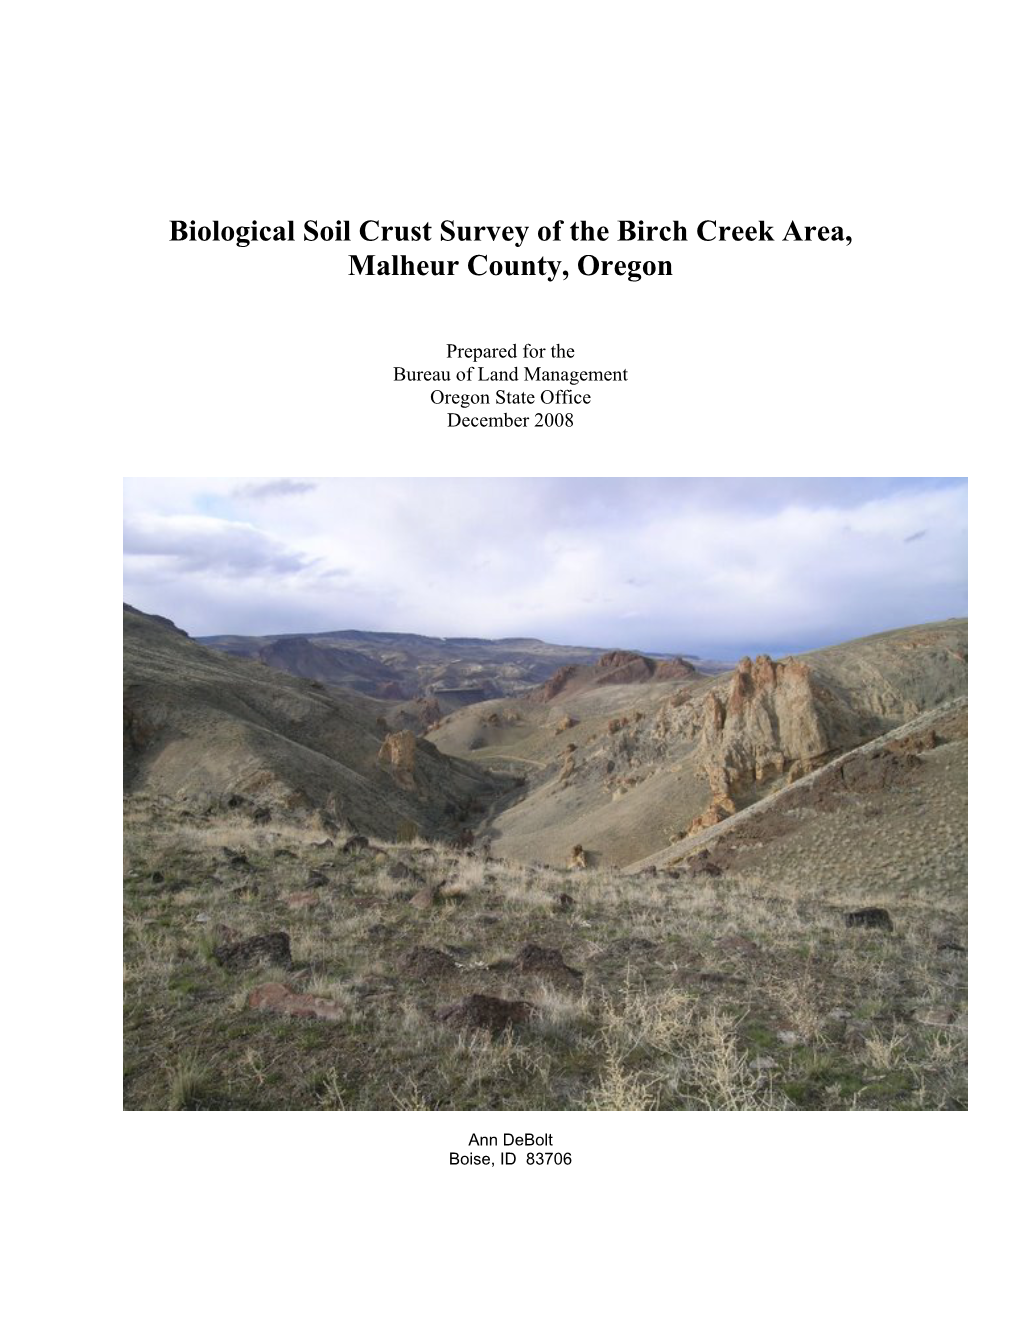 Biological Soil Crust Survey of the Birch Creek Area, Malheur County, Oregon